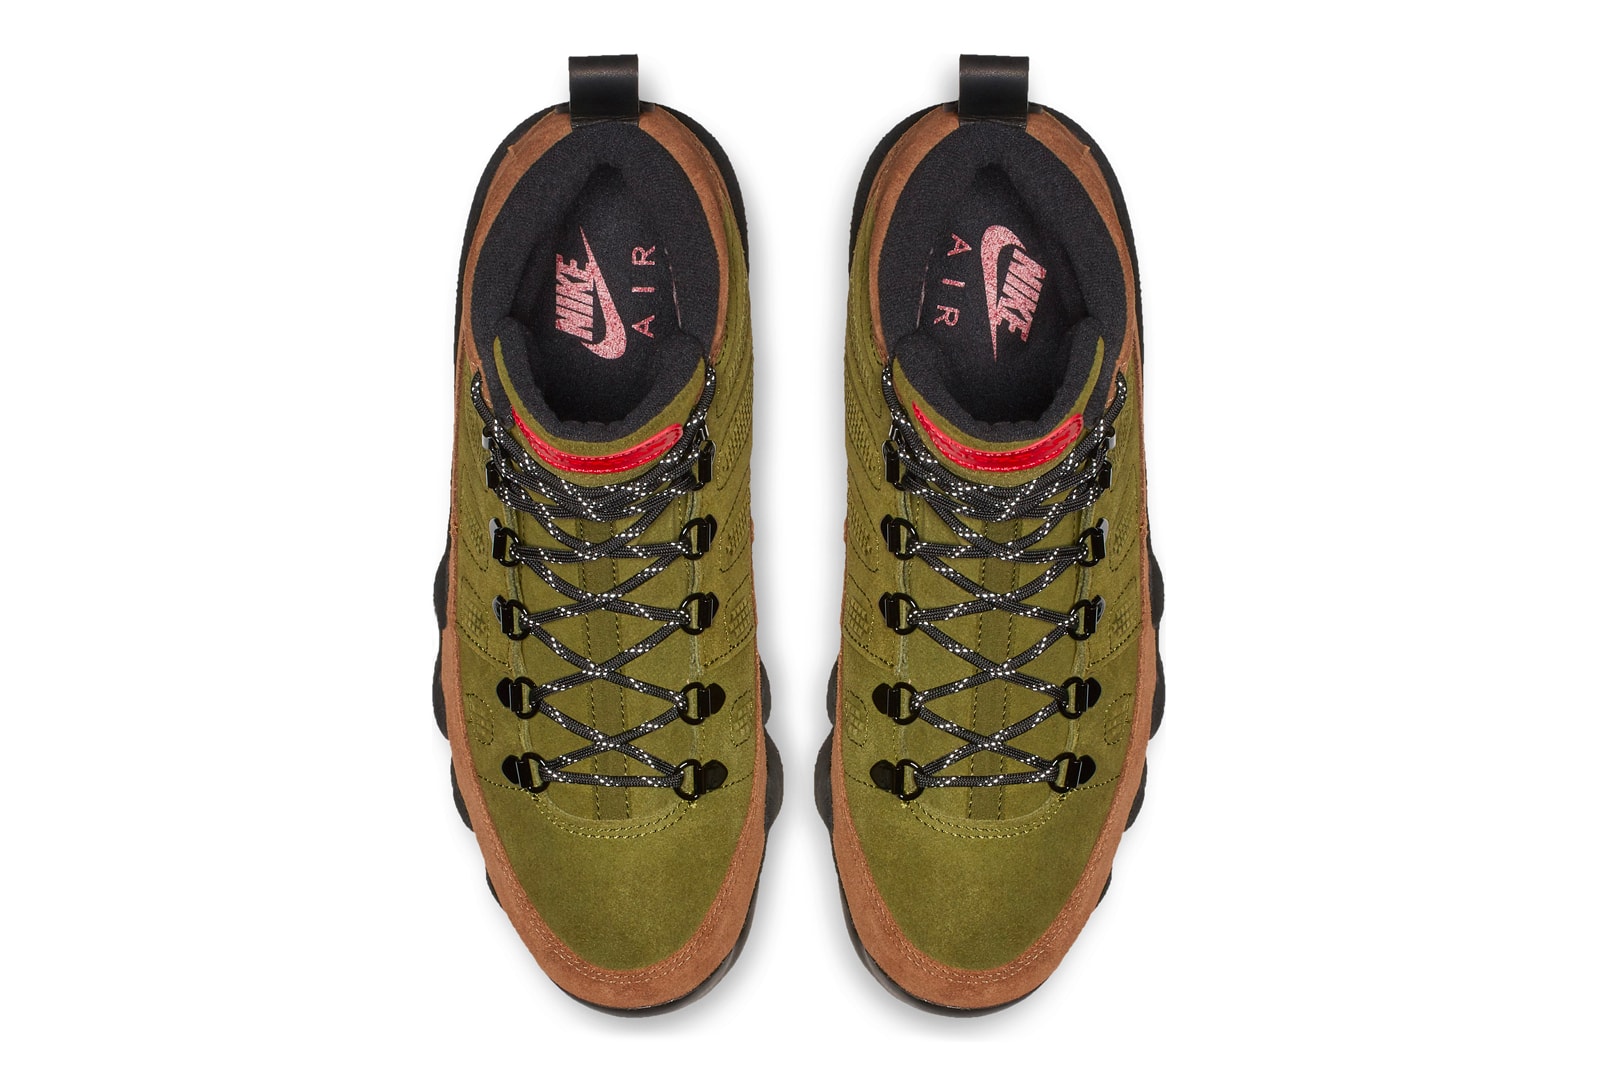 Air Jordan 9 Retro Boot NRG "Beef and Broccoli" Release Date sneaker brown olive colorway price info purchase online october 2018 jordan brand